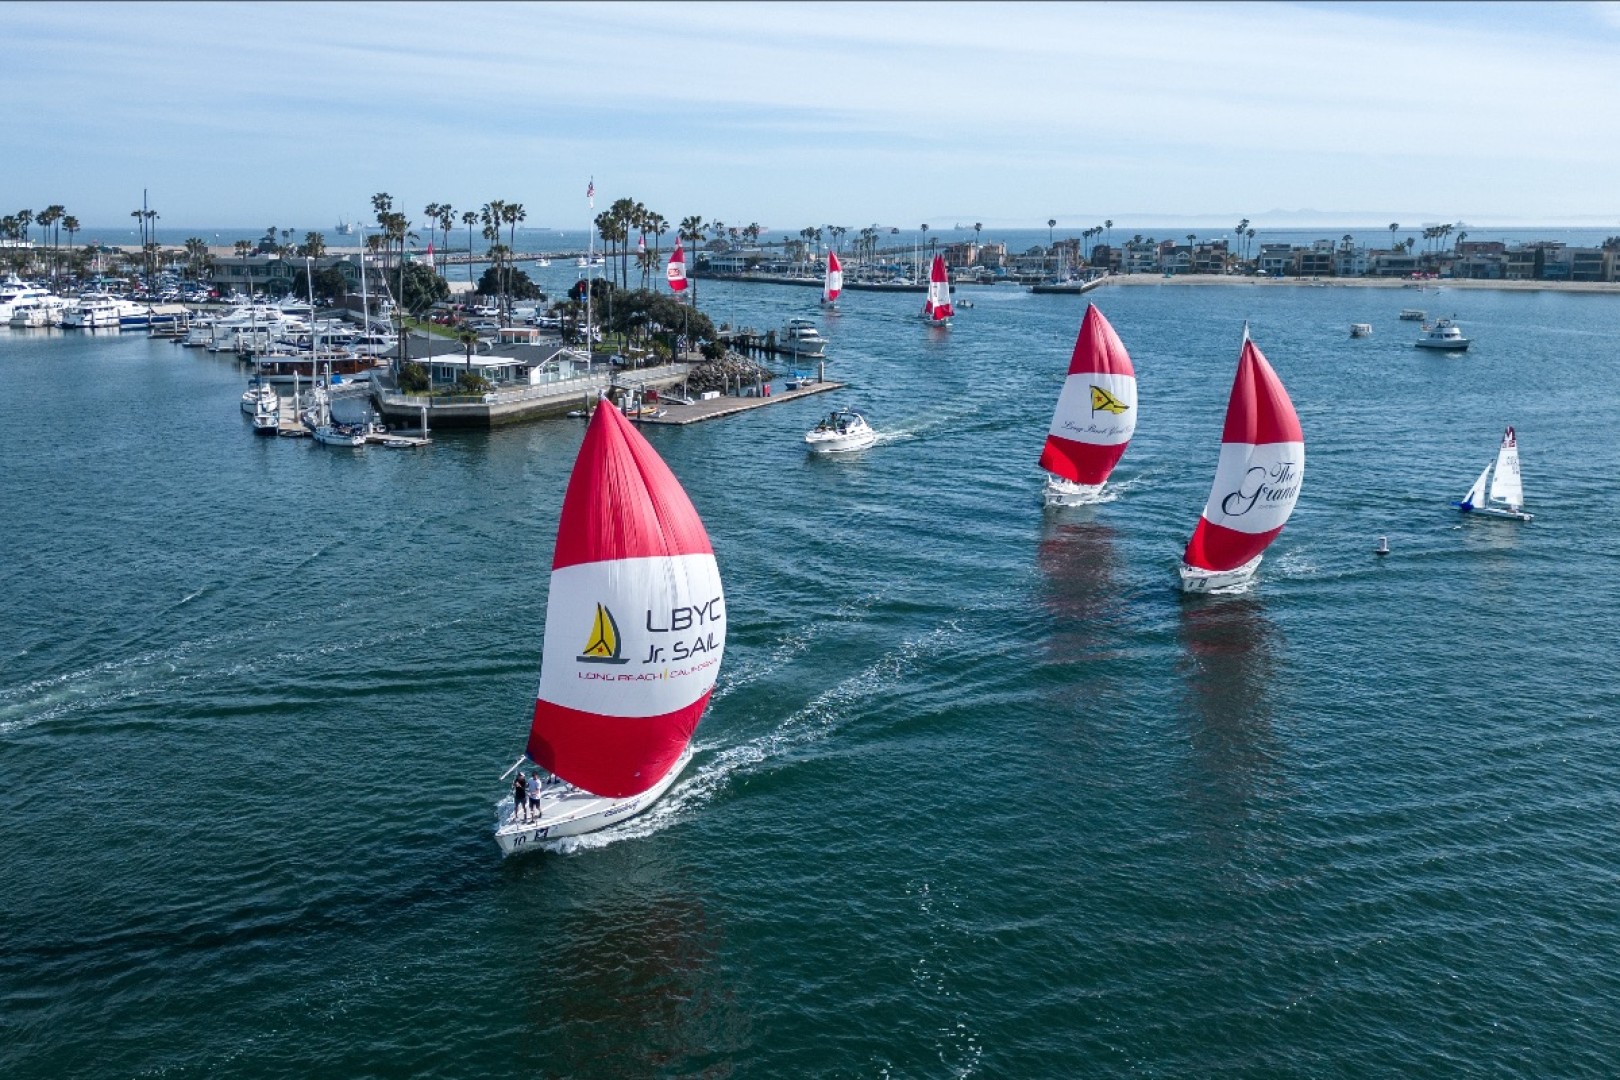 59th Annual Congressional Cup at Long Beach Yacht Club